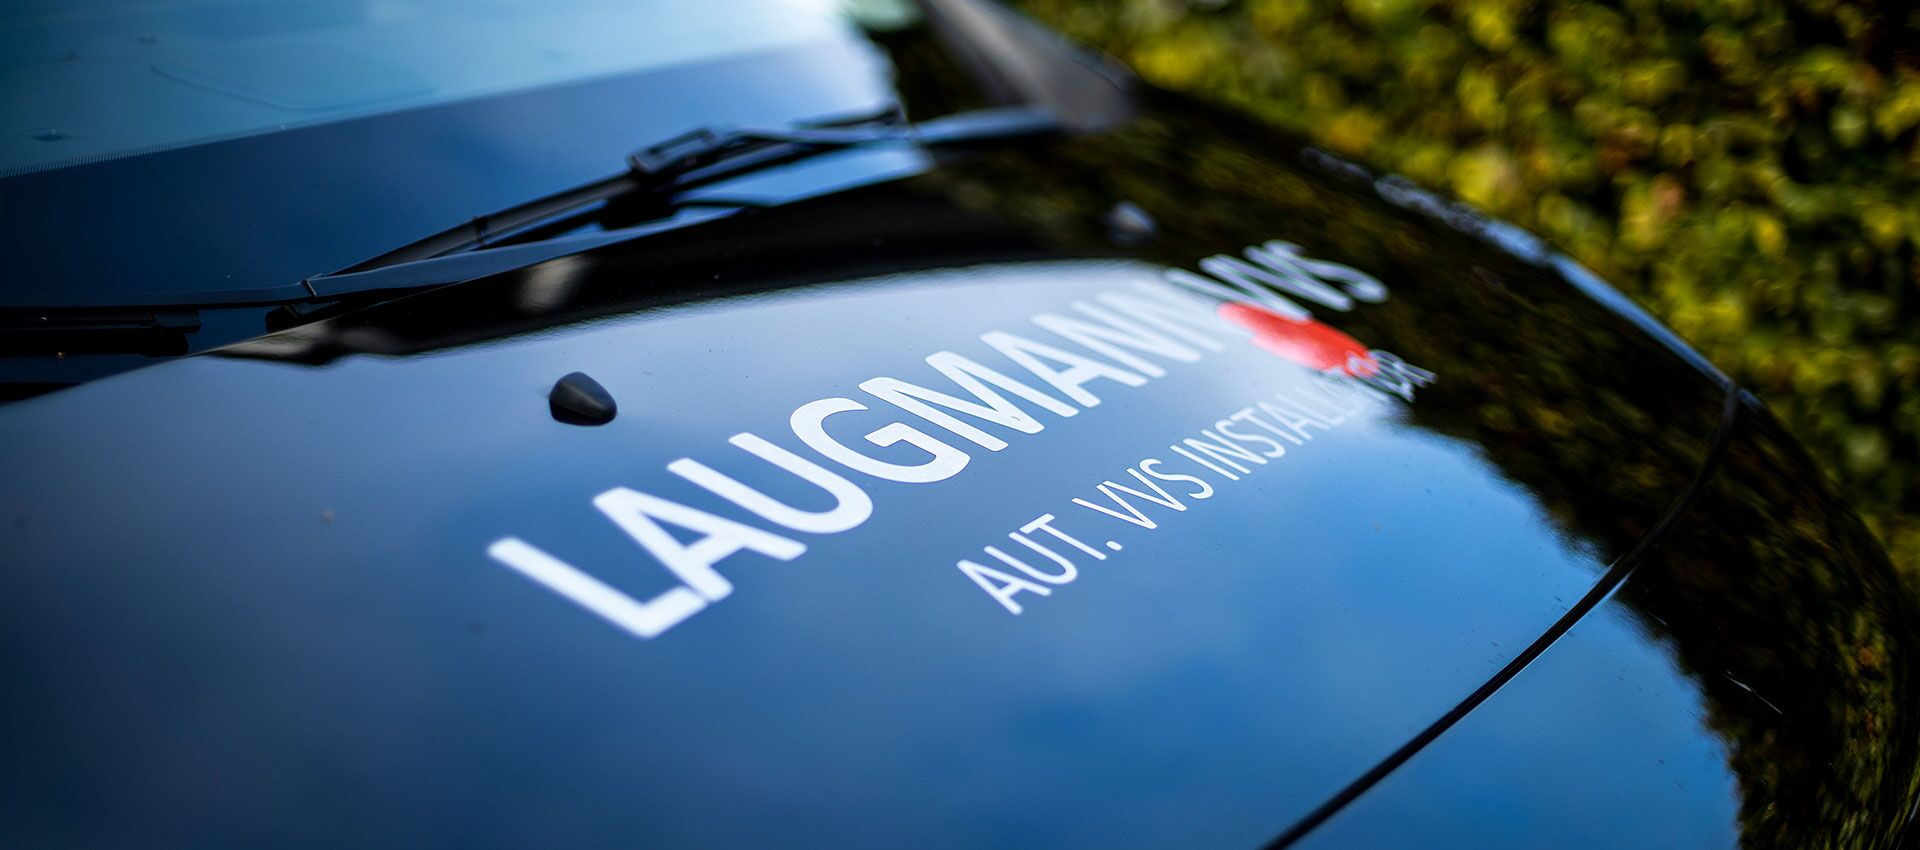 Laugmann VVS i Helsingør er et autoriseret VVS-firma.